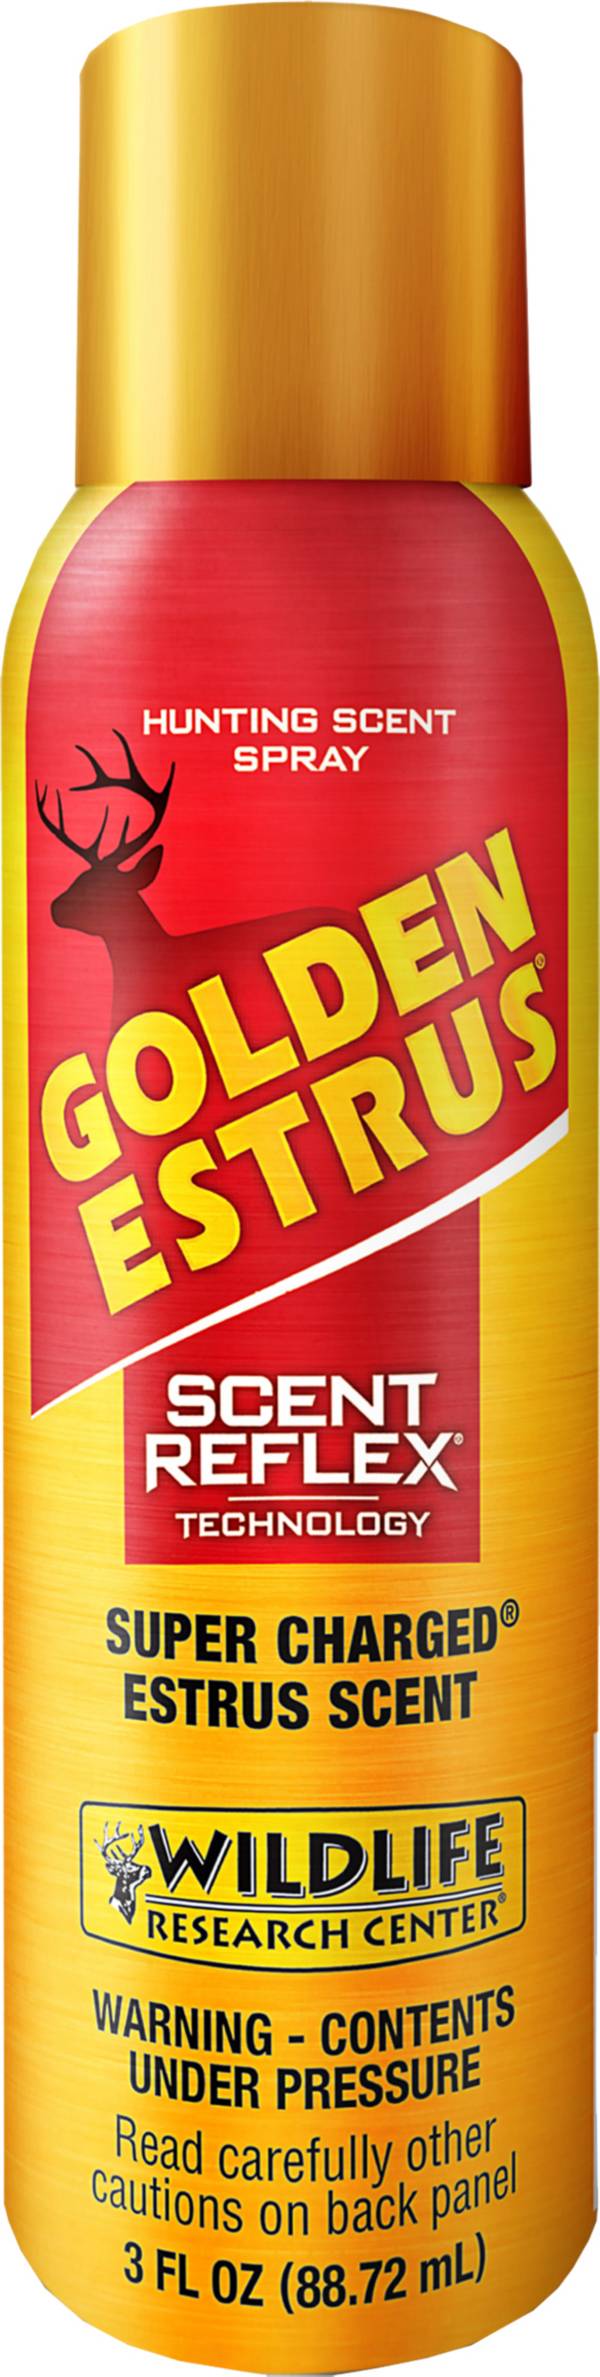 Wildlife Research Center Golden Estrus product image